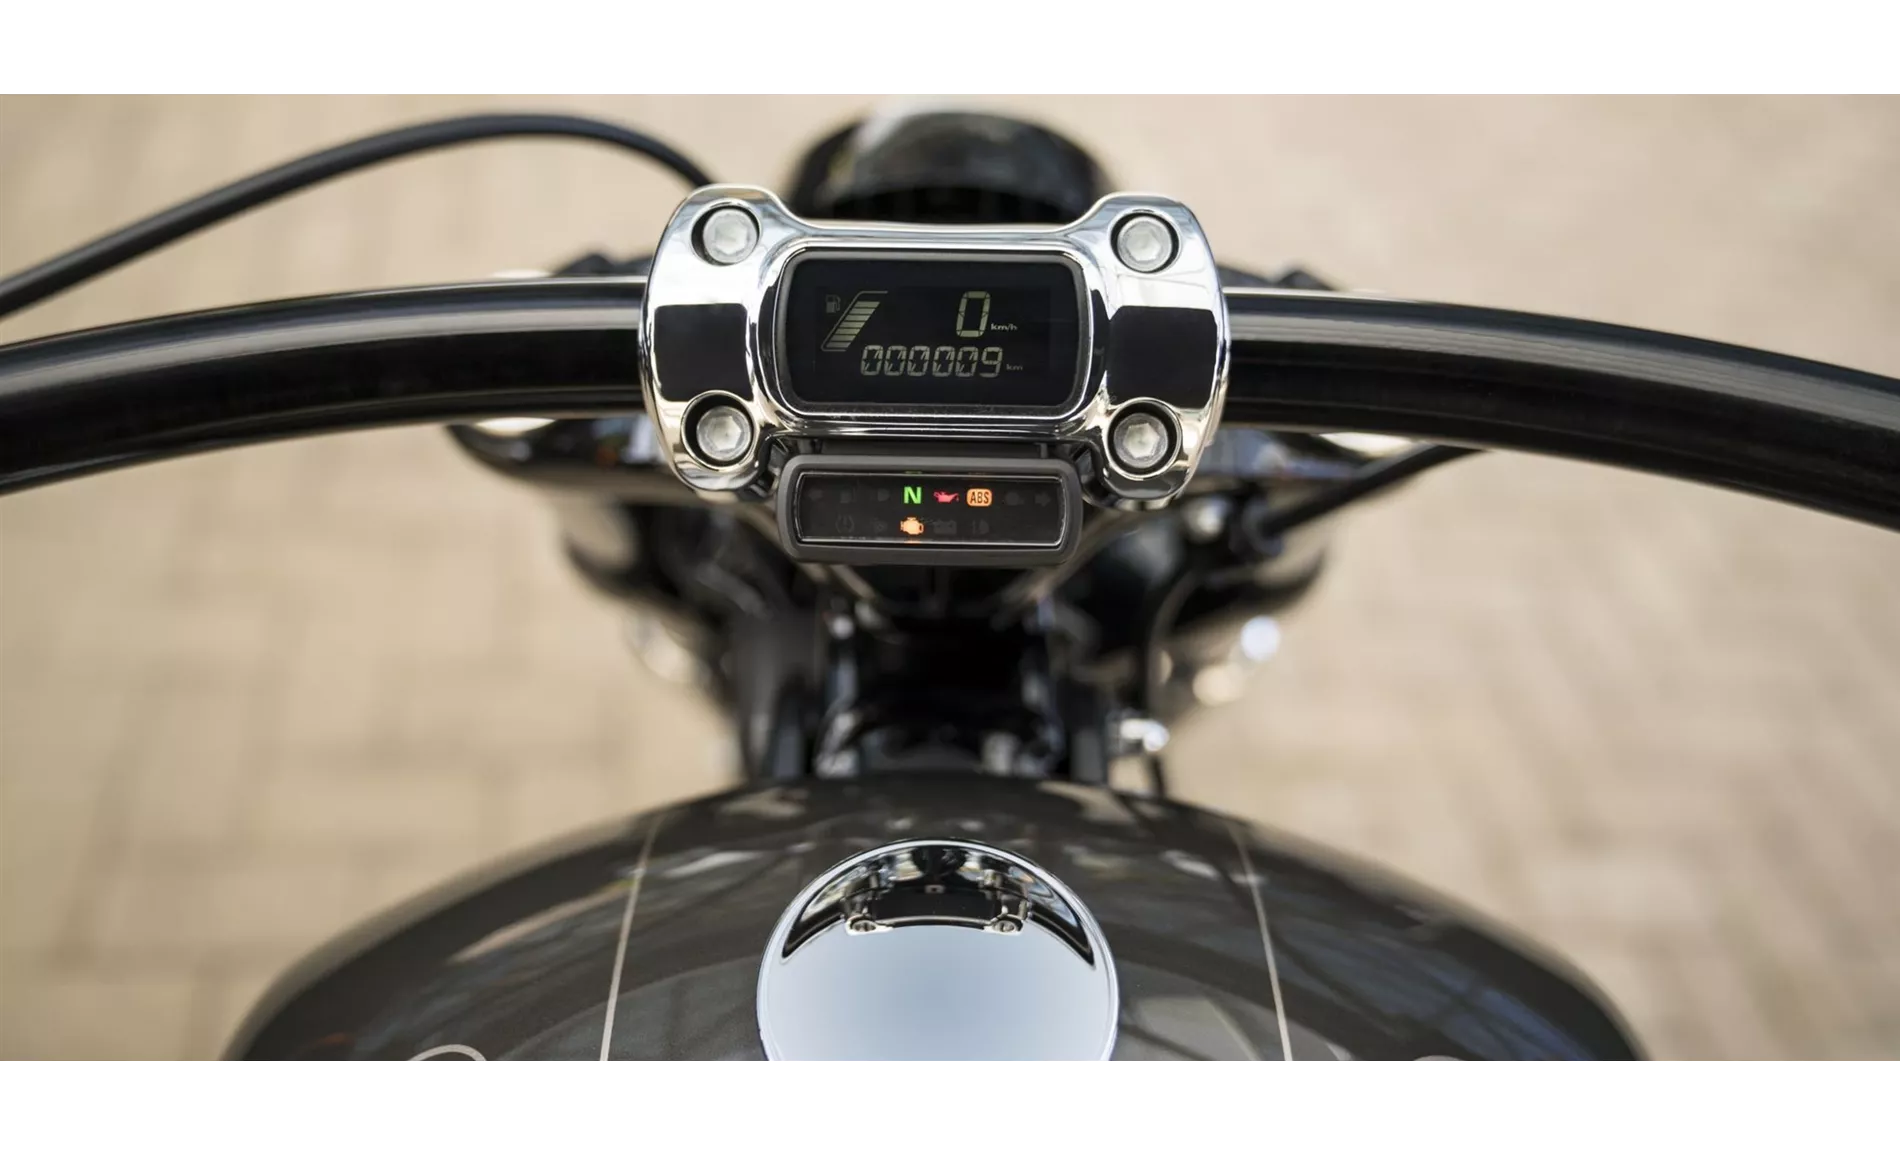 Harley-Davidson Softail Breakout 114 FXBRS 2021